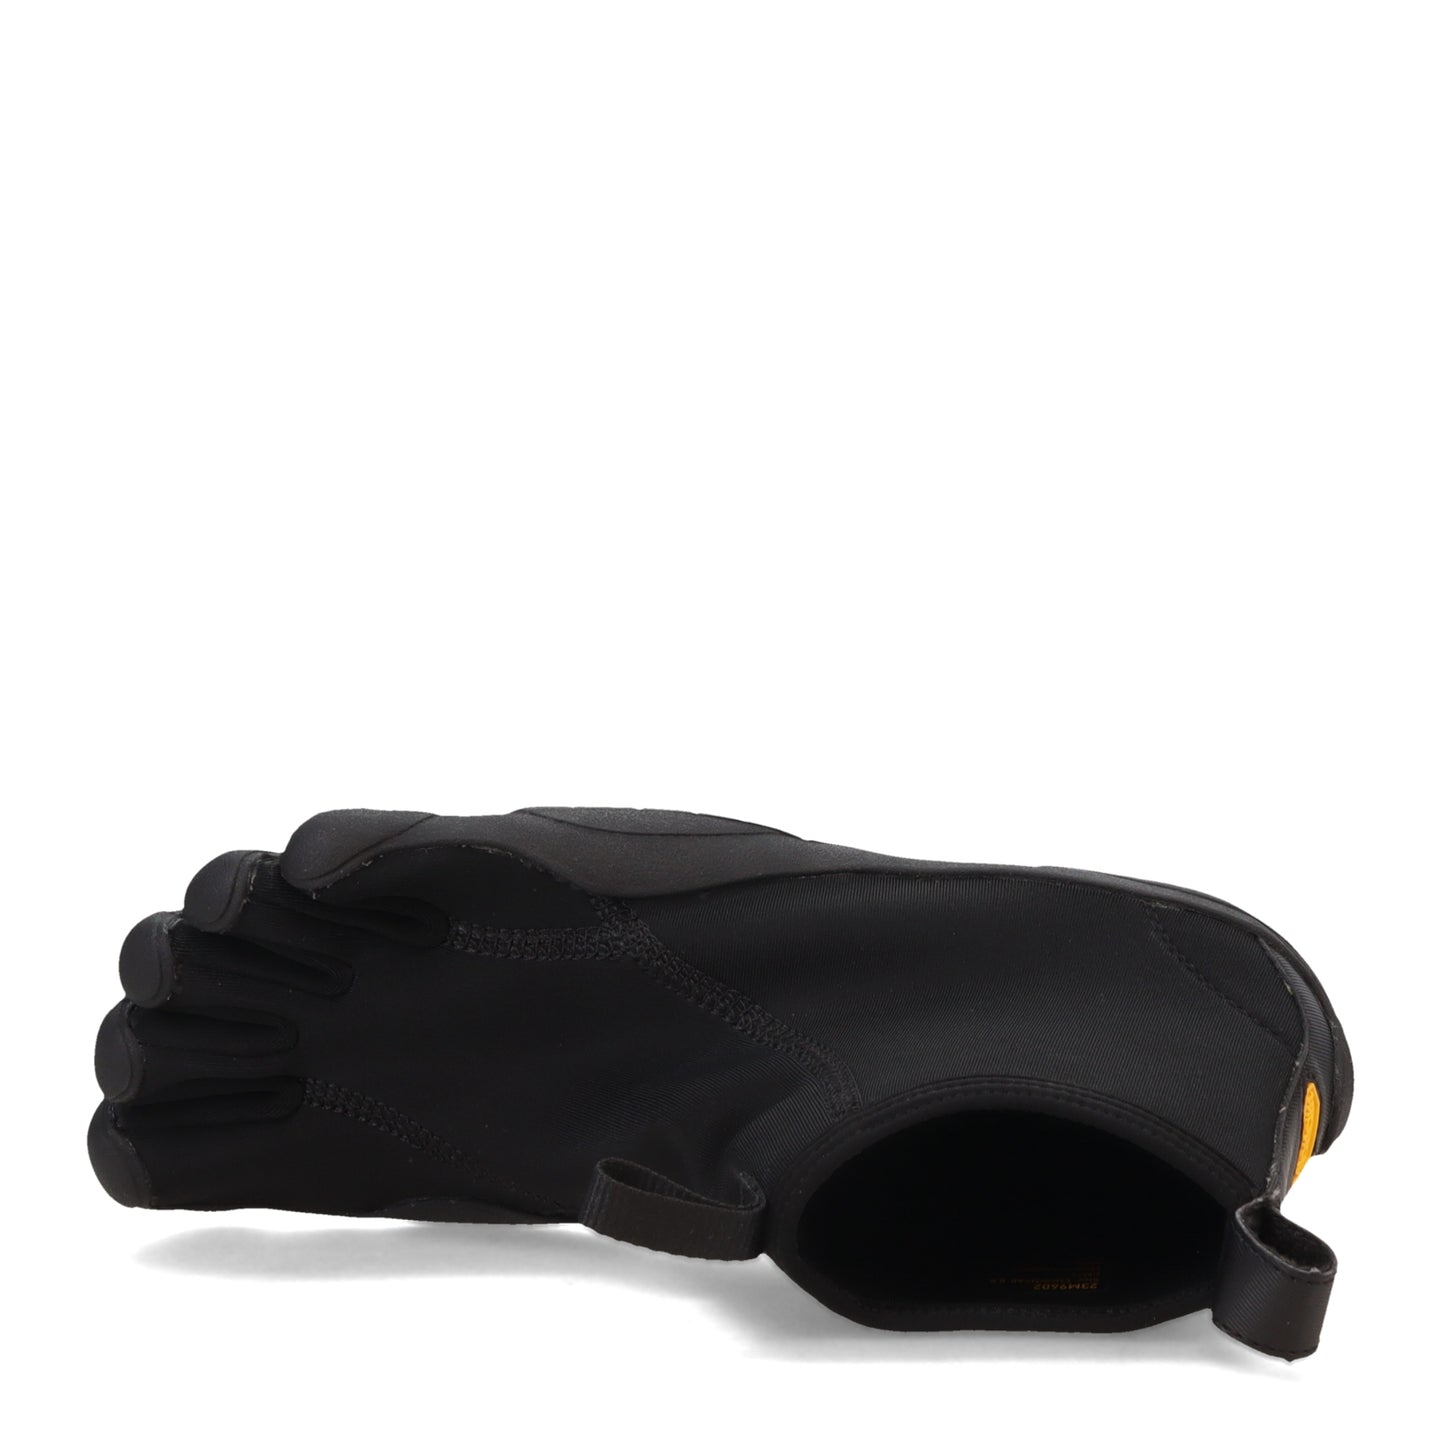 Peltz Shoes  Men's Vibram Five Fingers V-NEOP Hiking Shoe Black/Black 23M9602